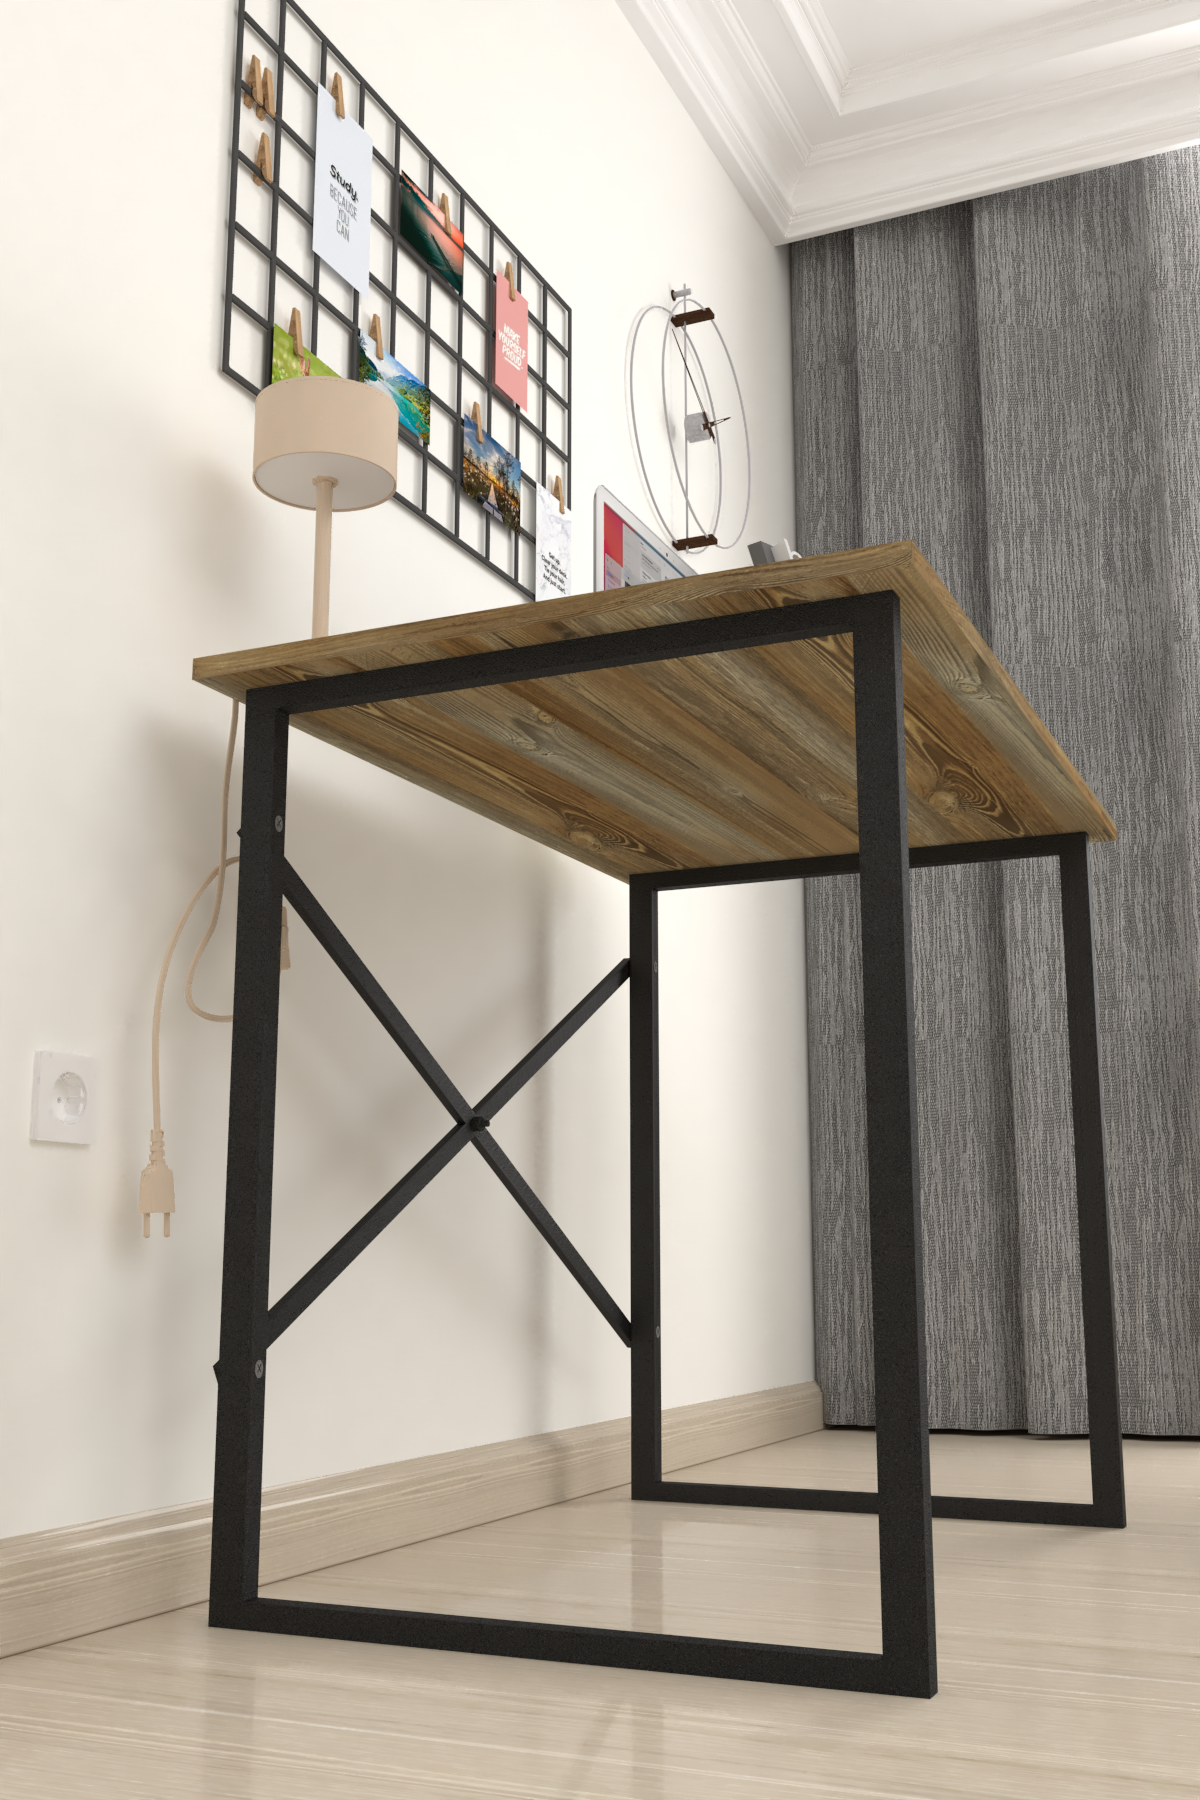 Bofigo Study Desk 60x90 cm Patik